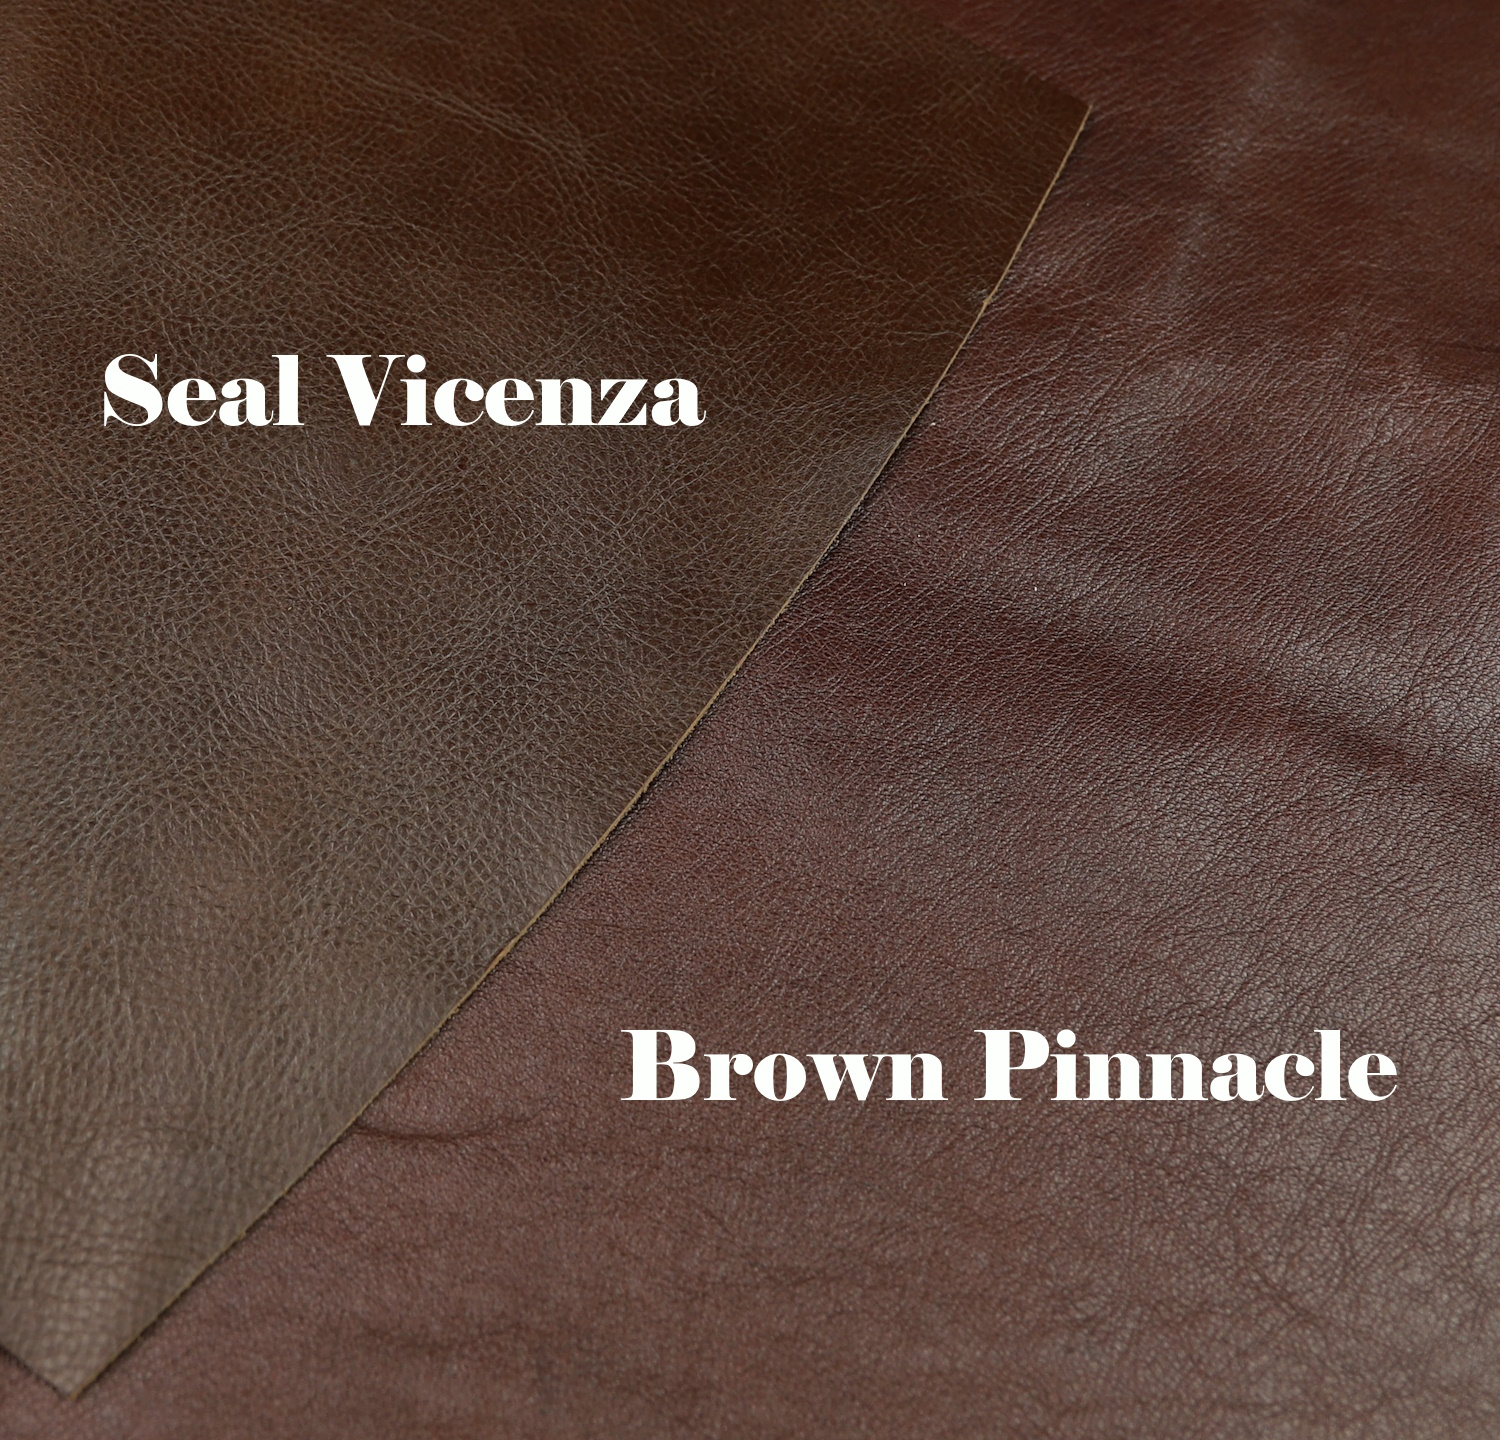 Vicenza Brown Pinnacle color comparison.jpg